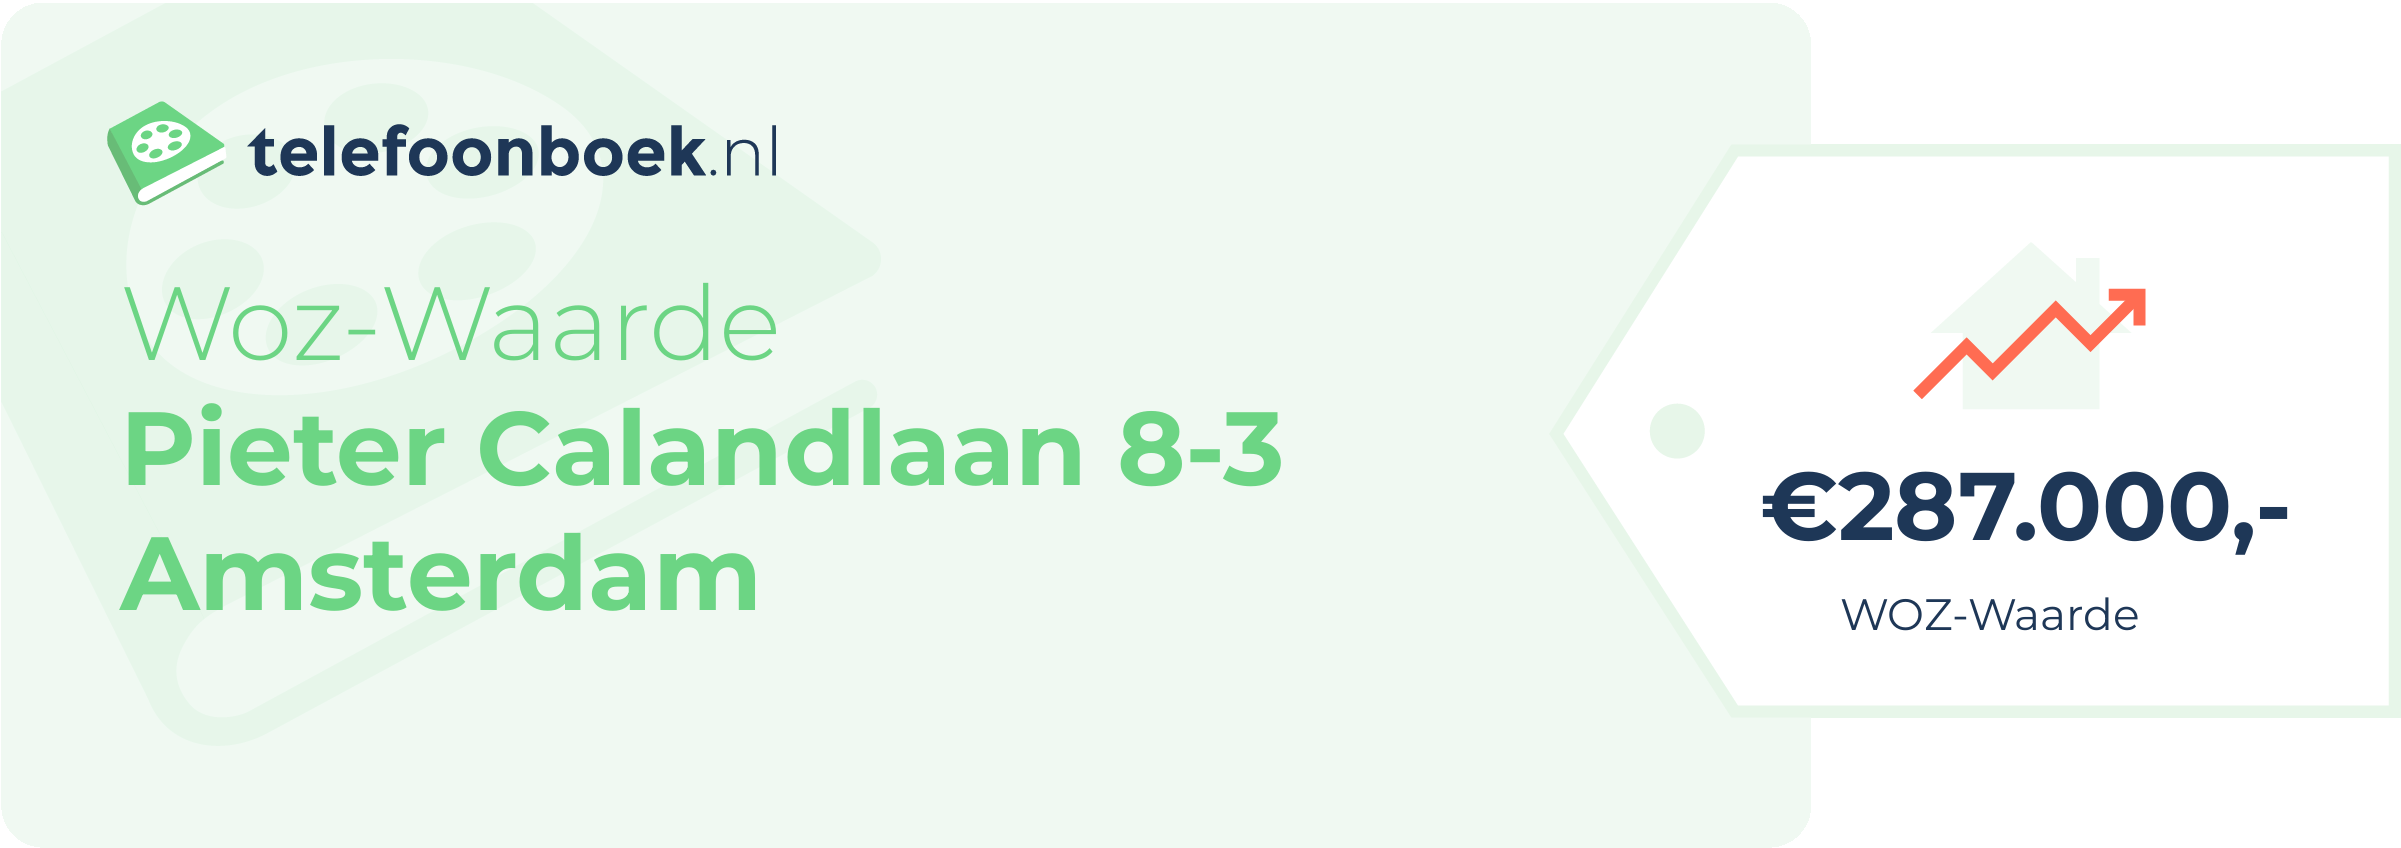 WOZ-waarde Pieter Calandlaan 8-3 Amsterdam